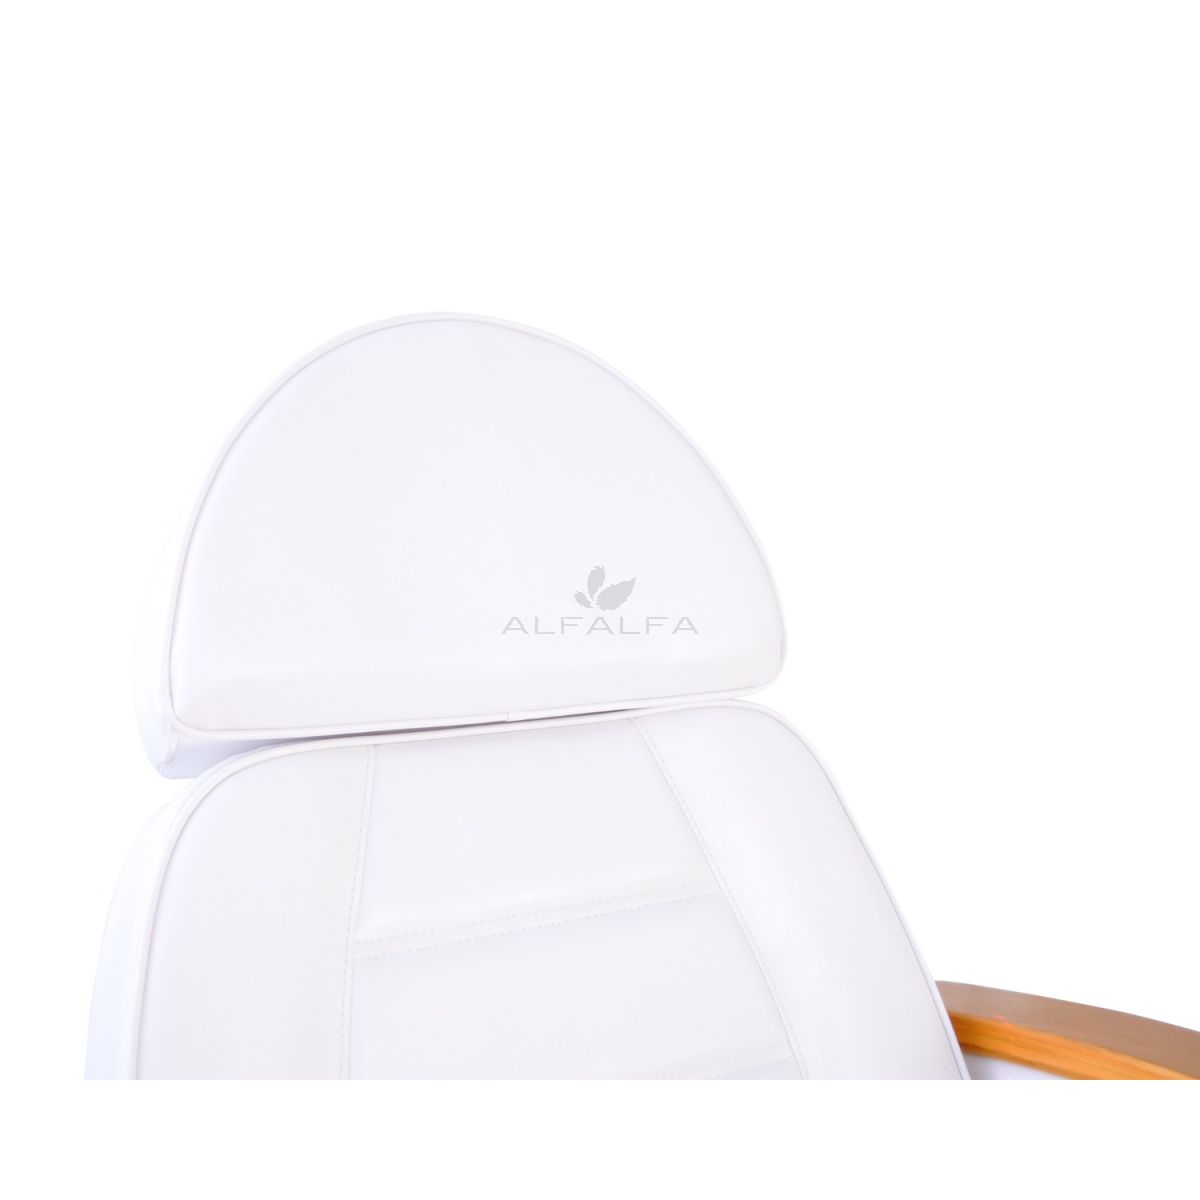 Facial Beauty Chair & Wooden Armrests, Split Legs w/ 5 Motors - White